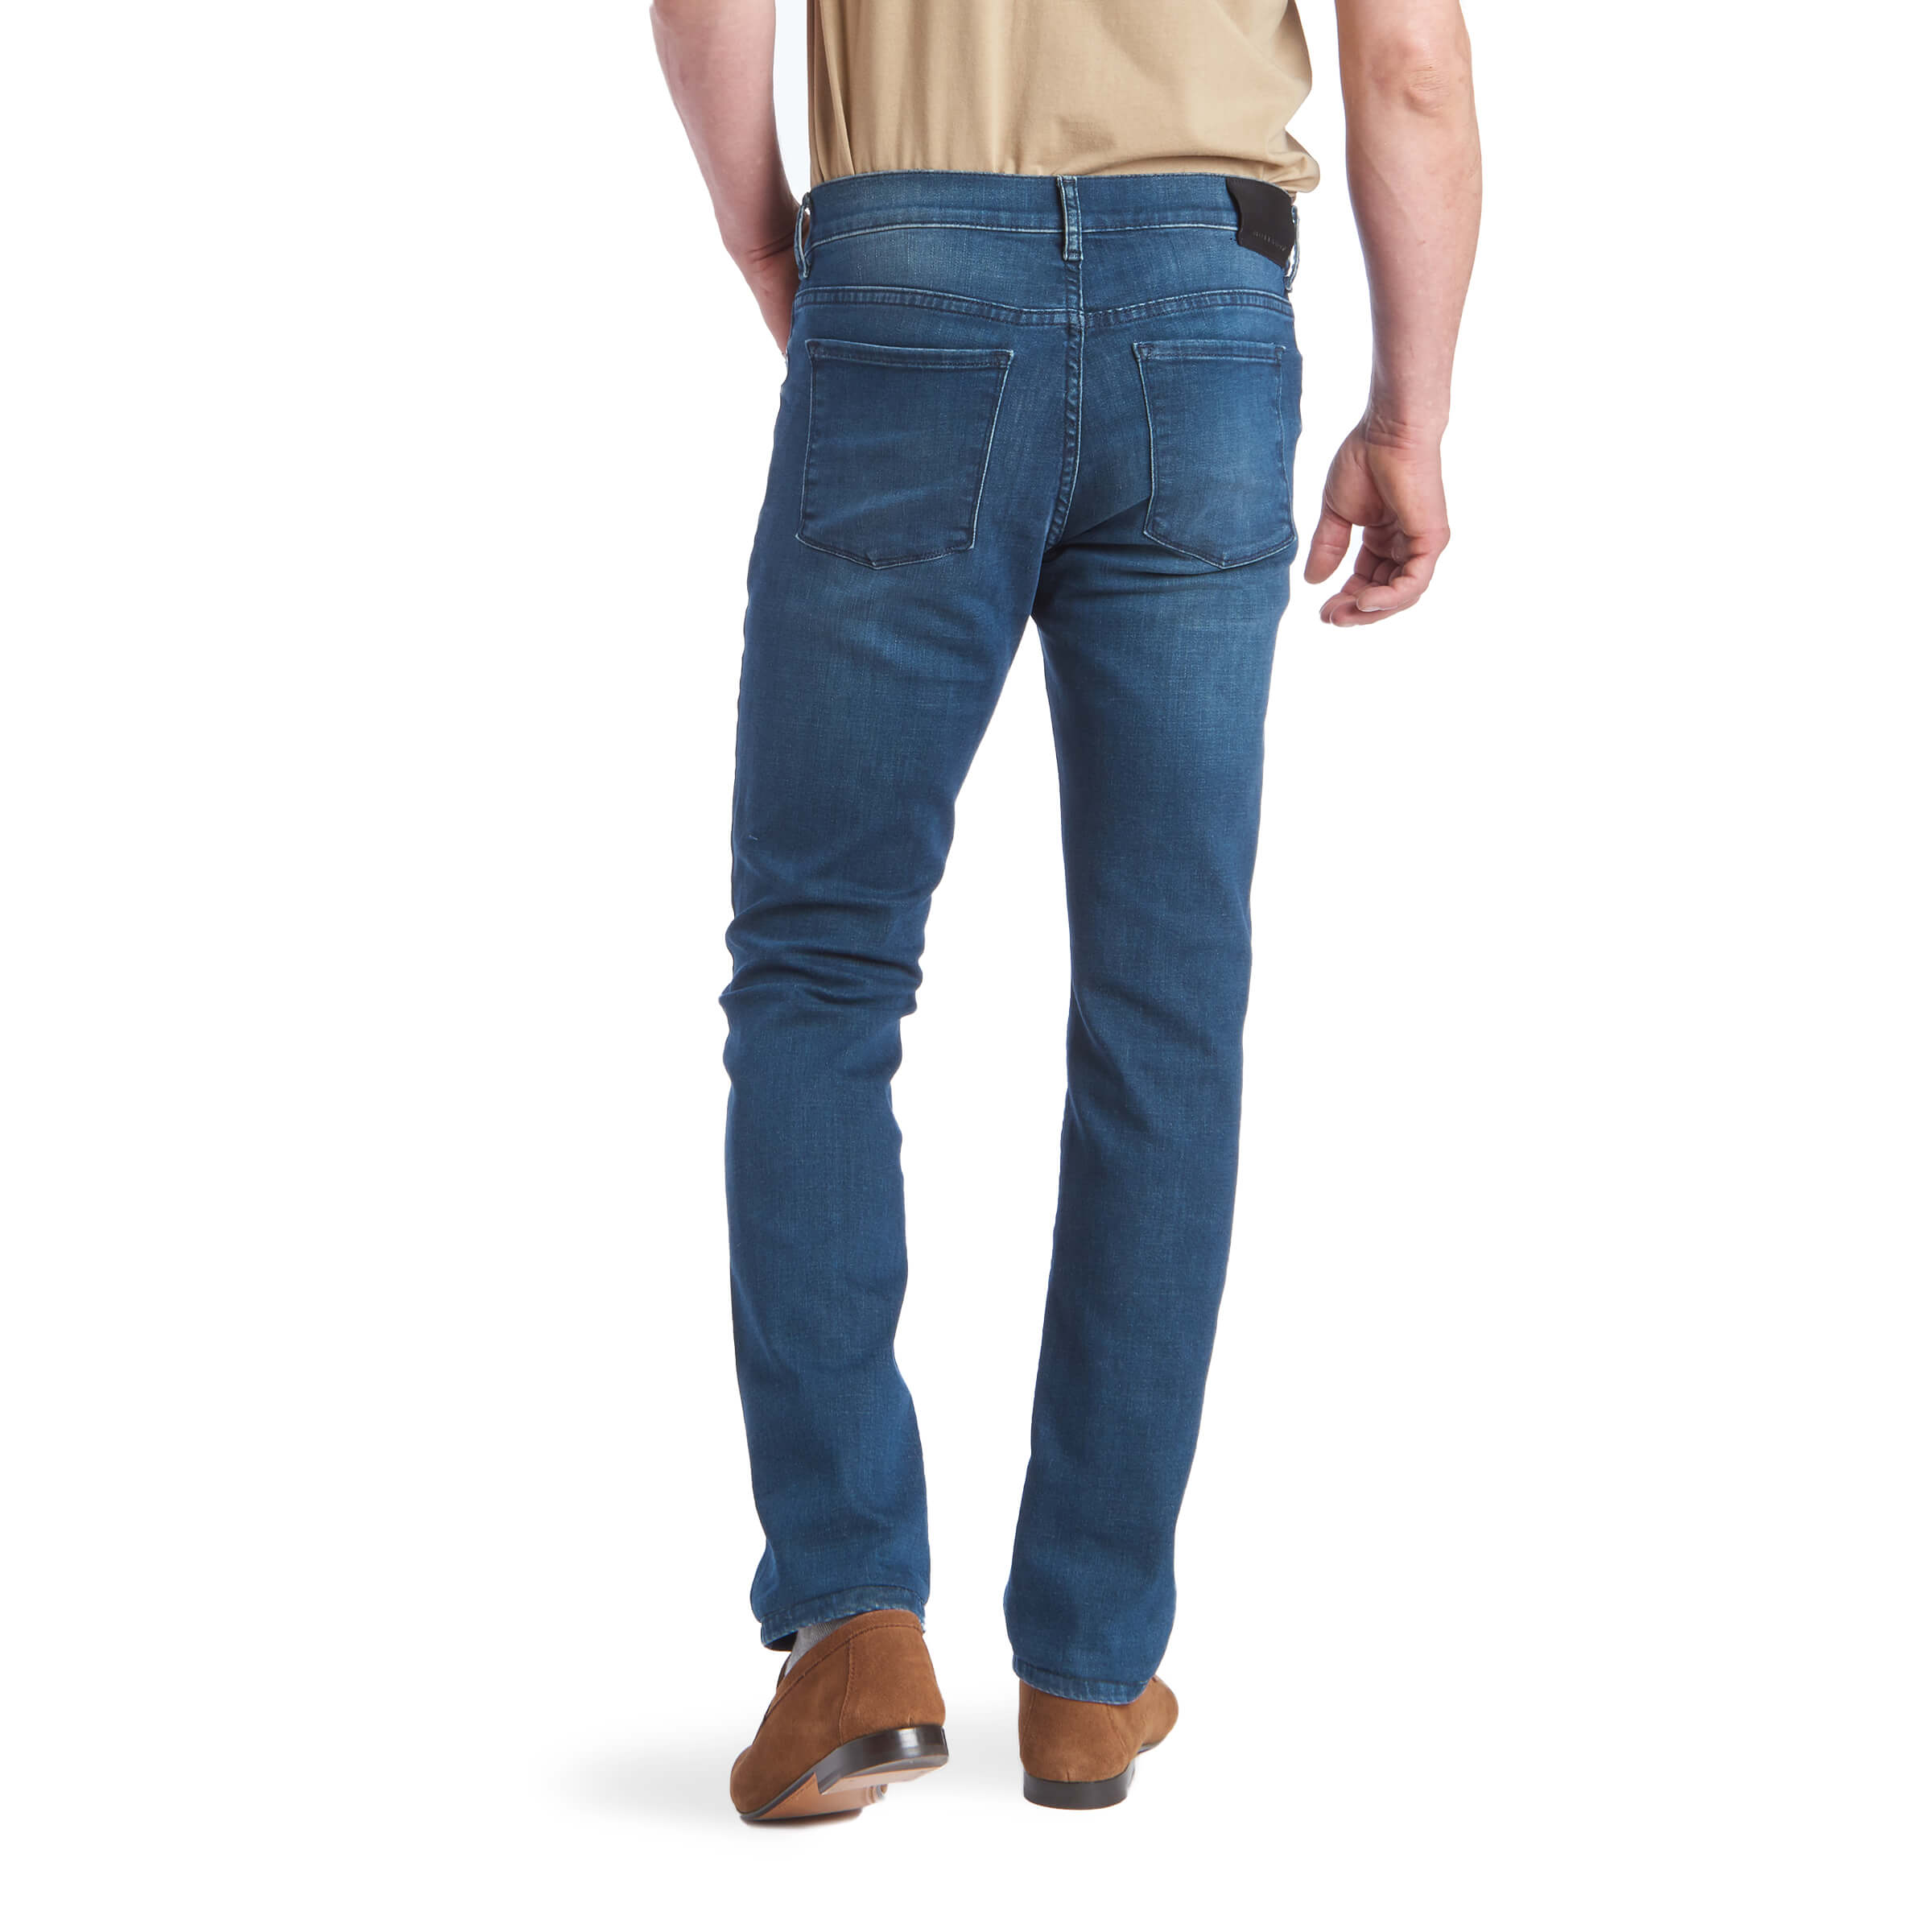 Men wearing Medium/Dark Blue Slim Fulton Jeans